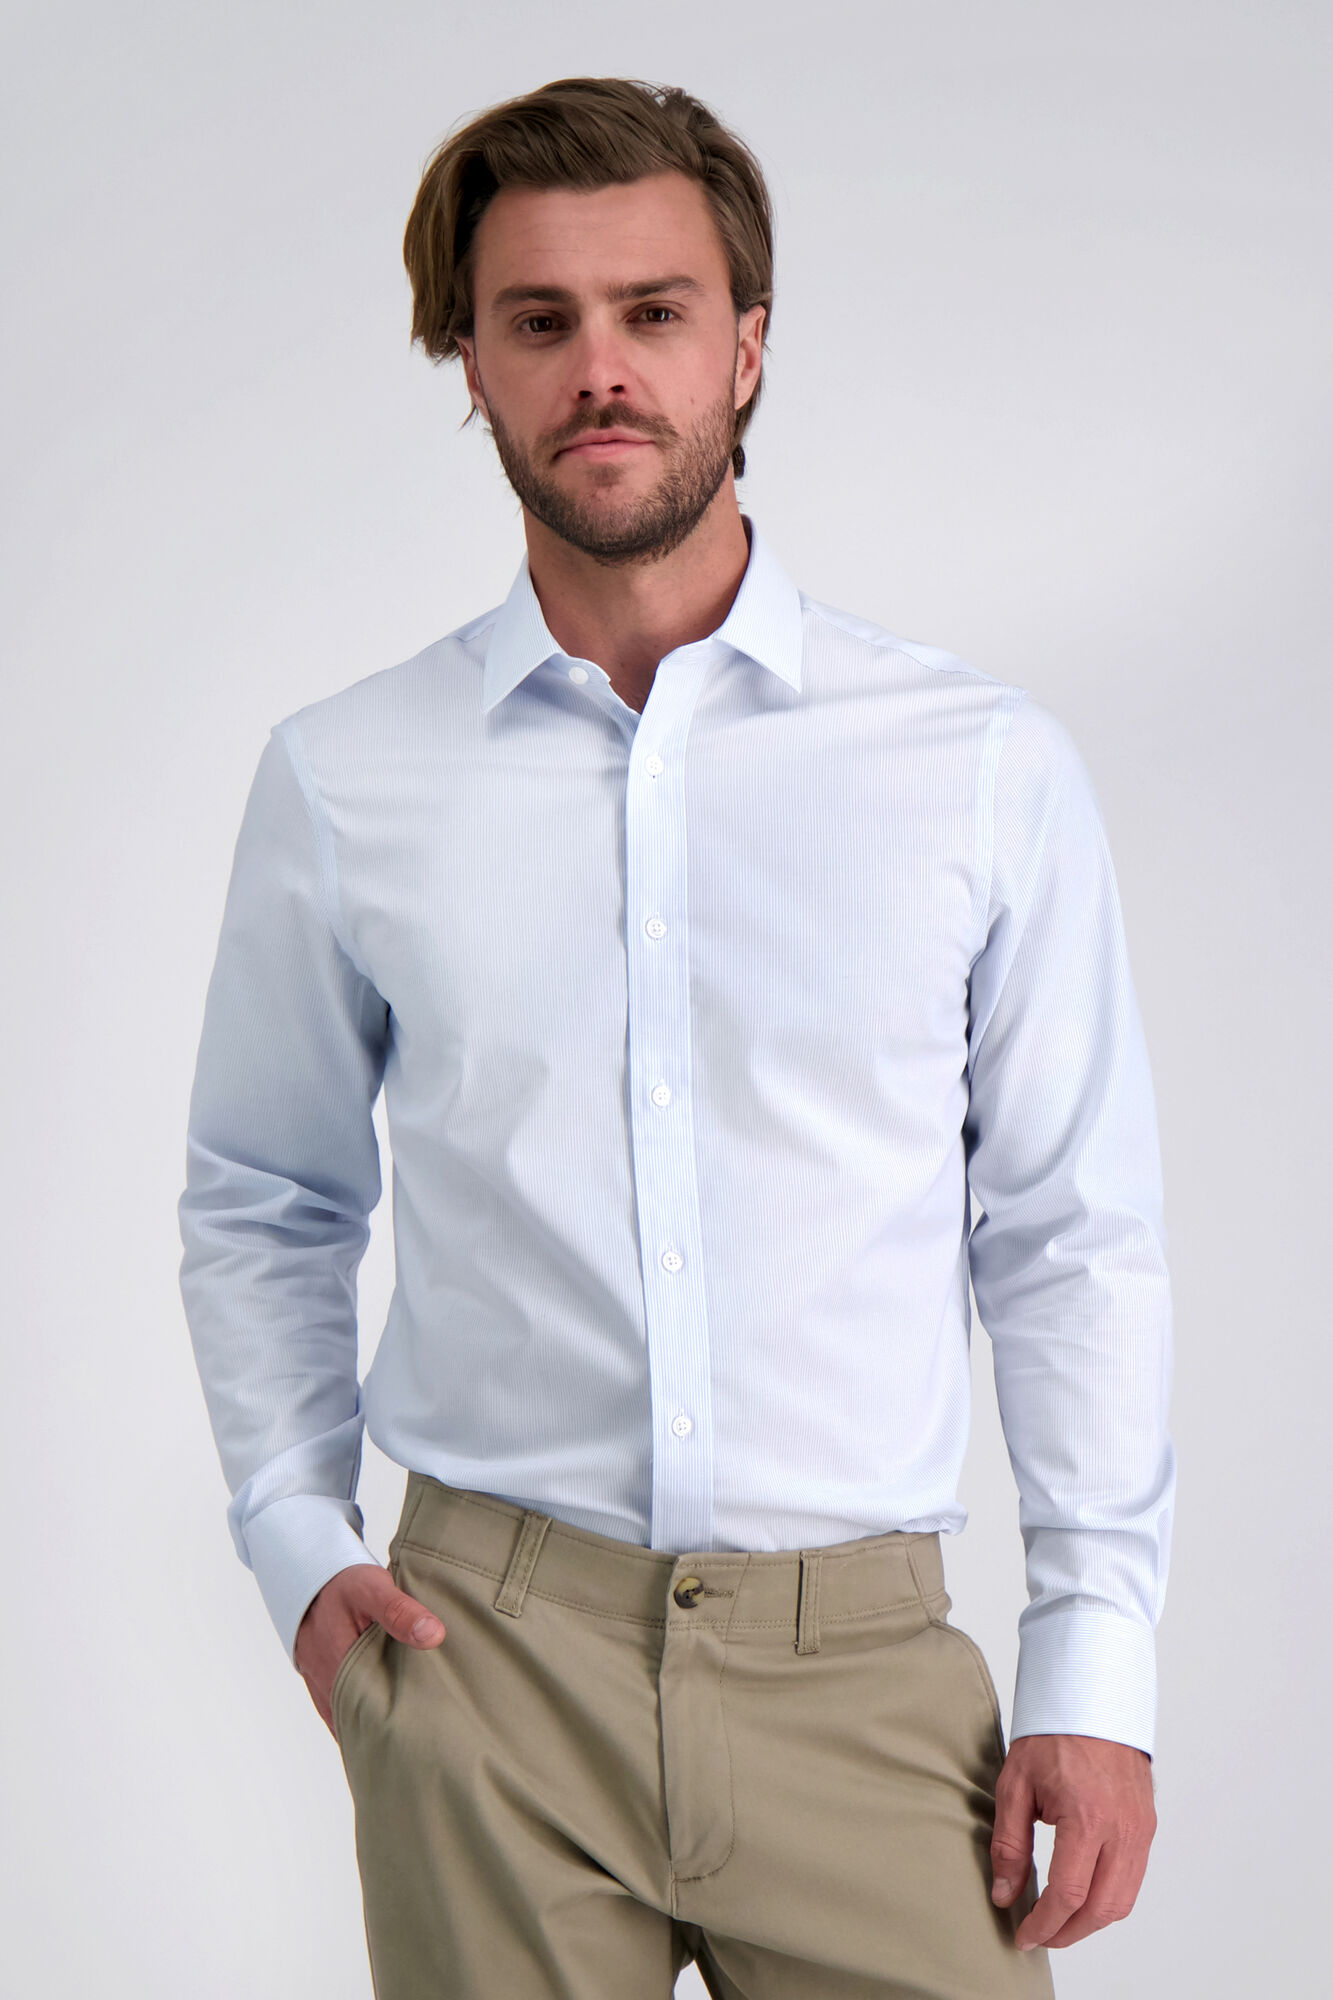 Haggar Premium Comfort Performance Cotton Dress Shirt - White & Blue Stripe Oatmeal (HAG028HE517 Clothing Shirts & Tops) photo